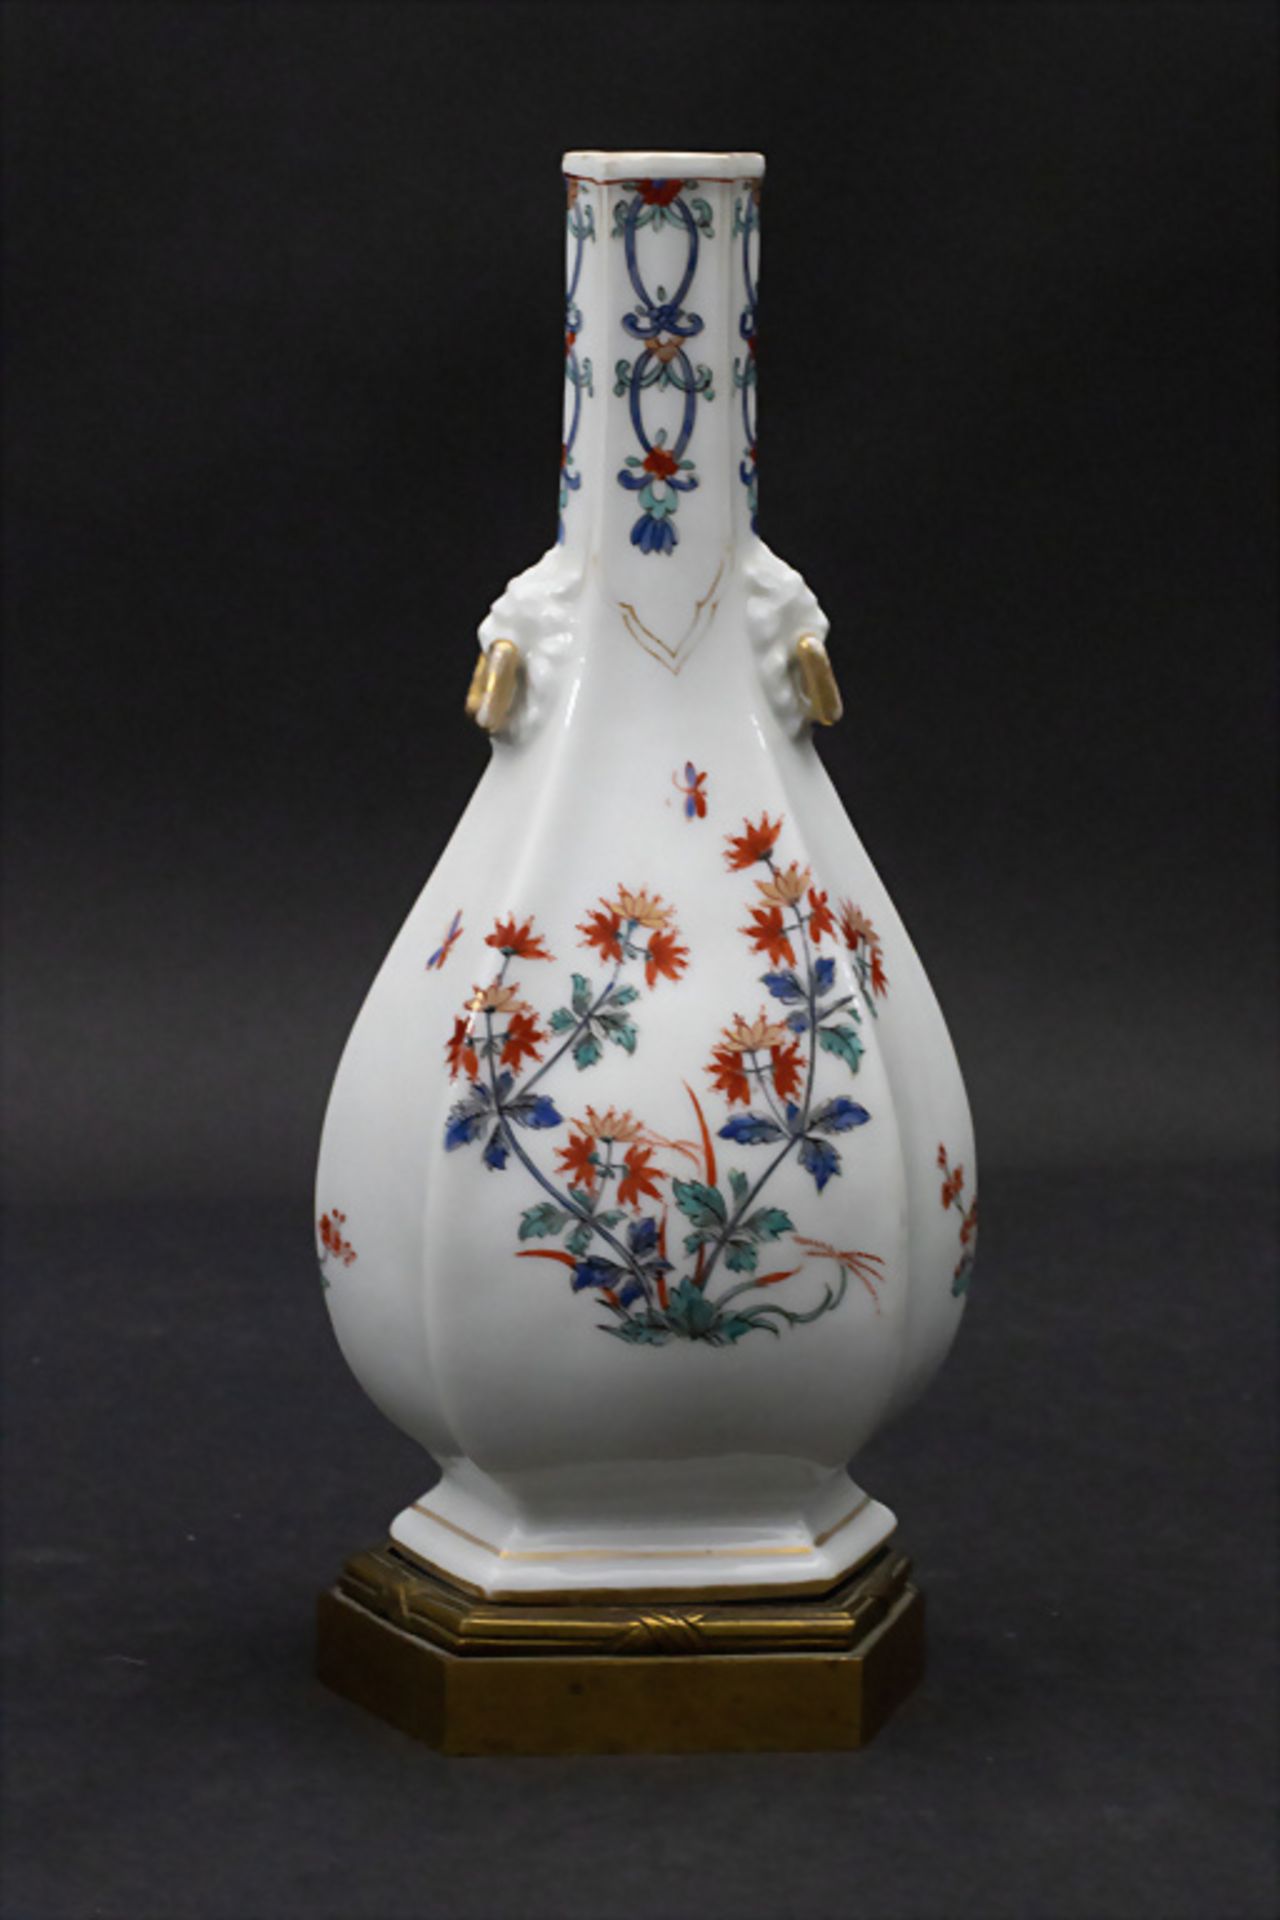 Kakiemon Deckelvasen-Paar / A pair of Kakiemon lidded vases, wohl Meissen oder Chantilly, 18. Jh. - Image 9 of 12